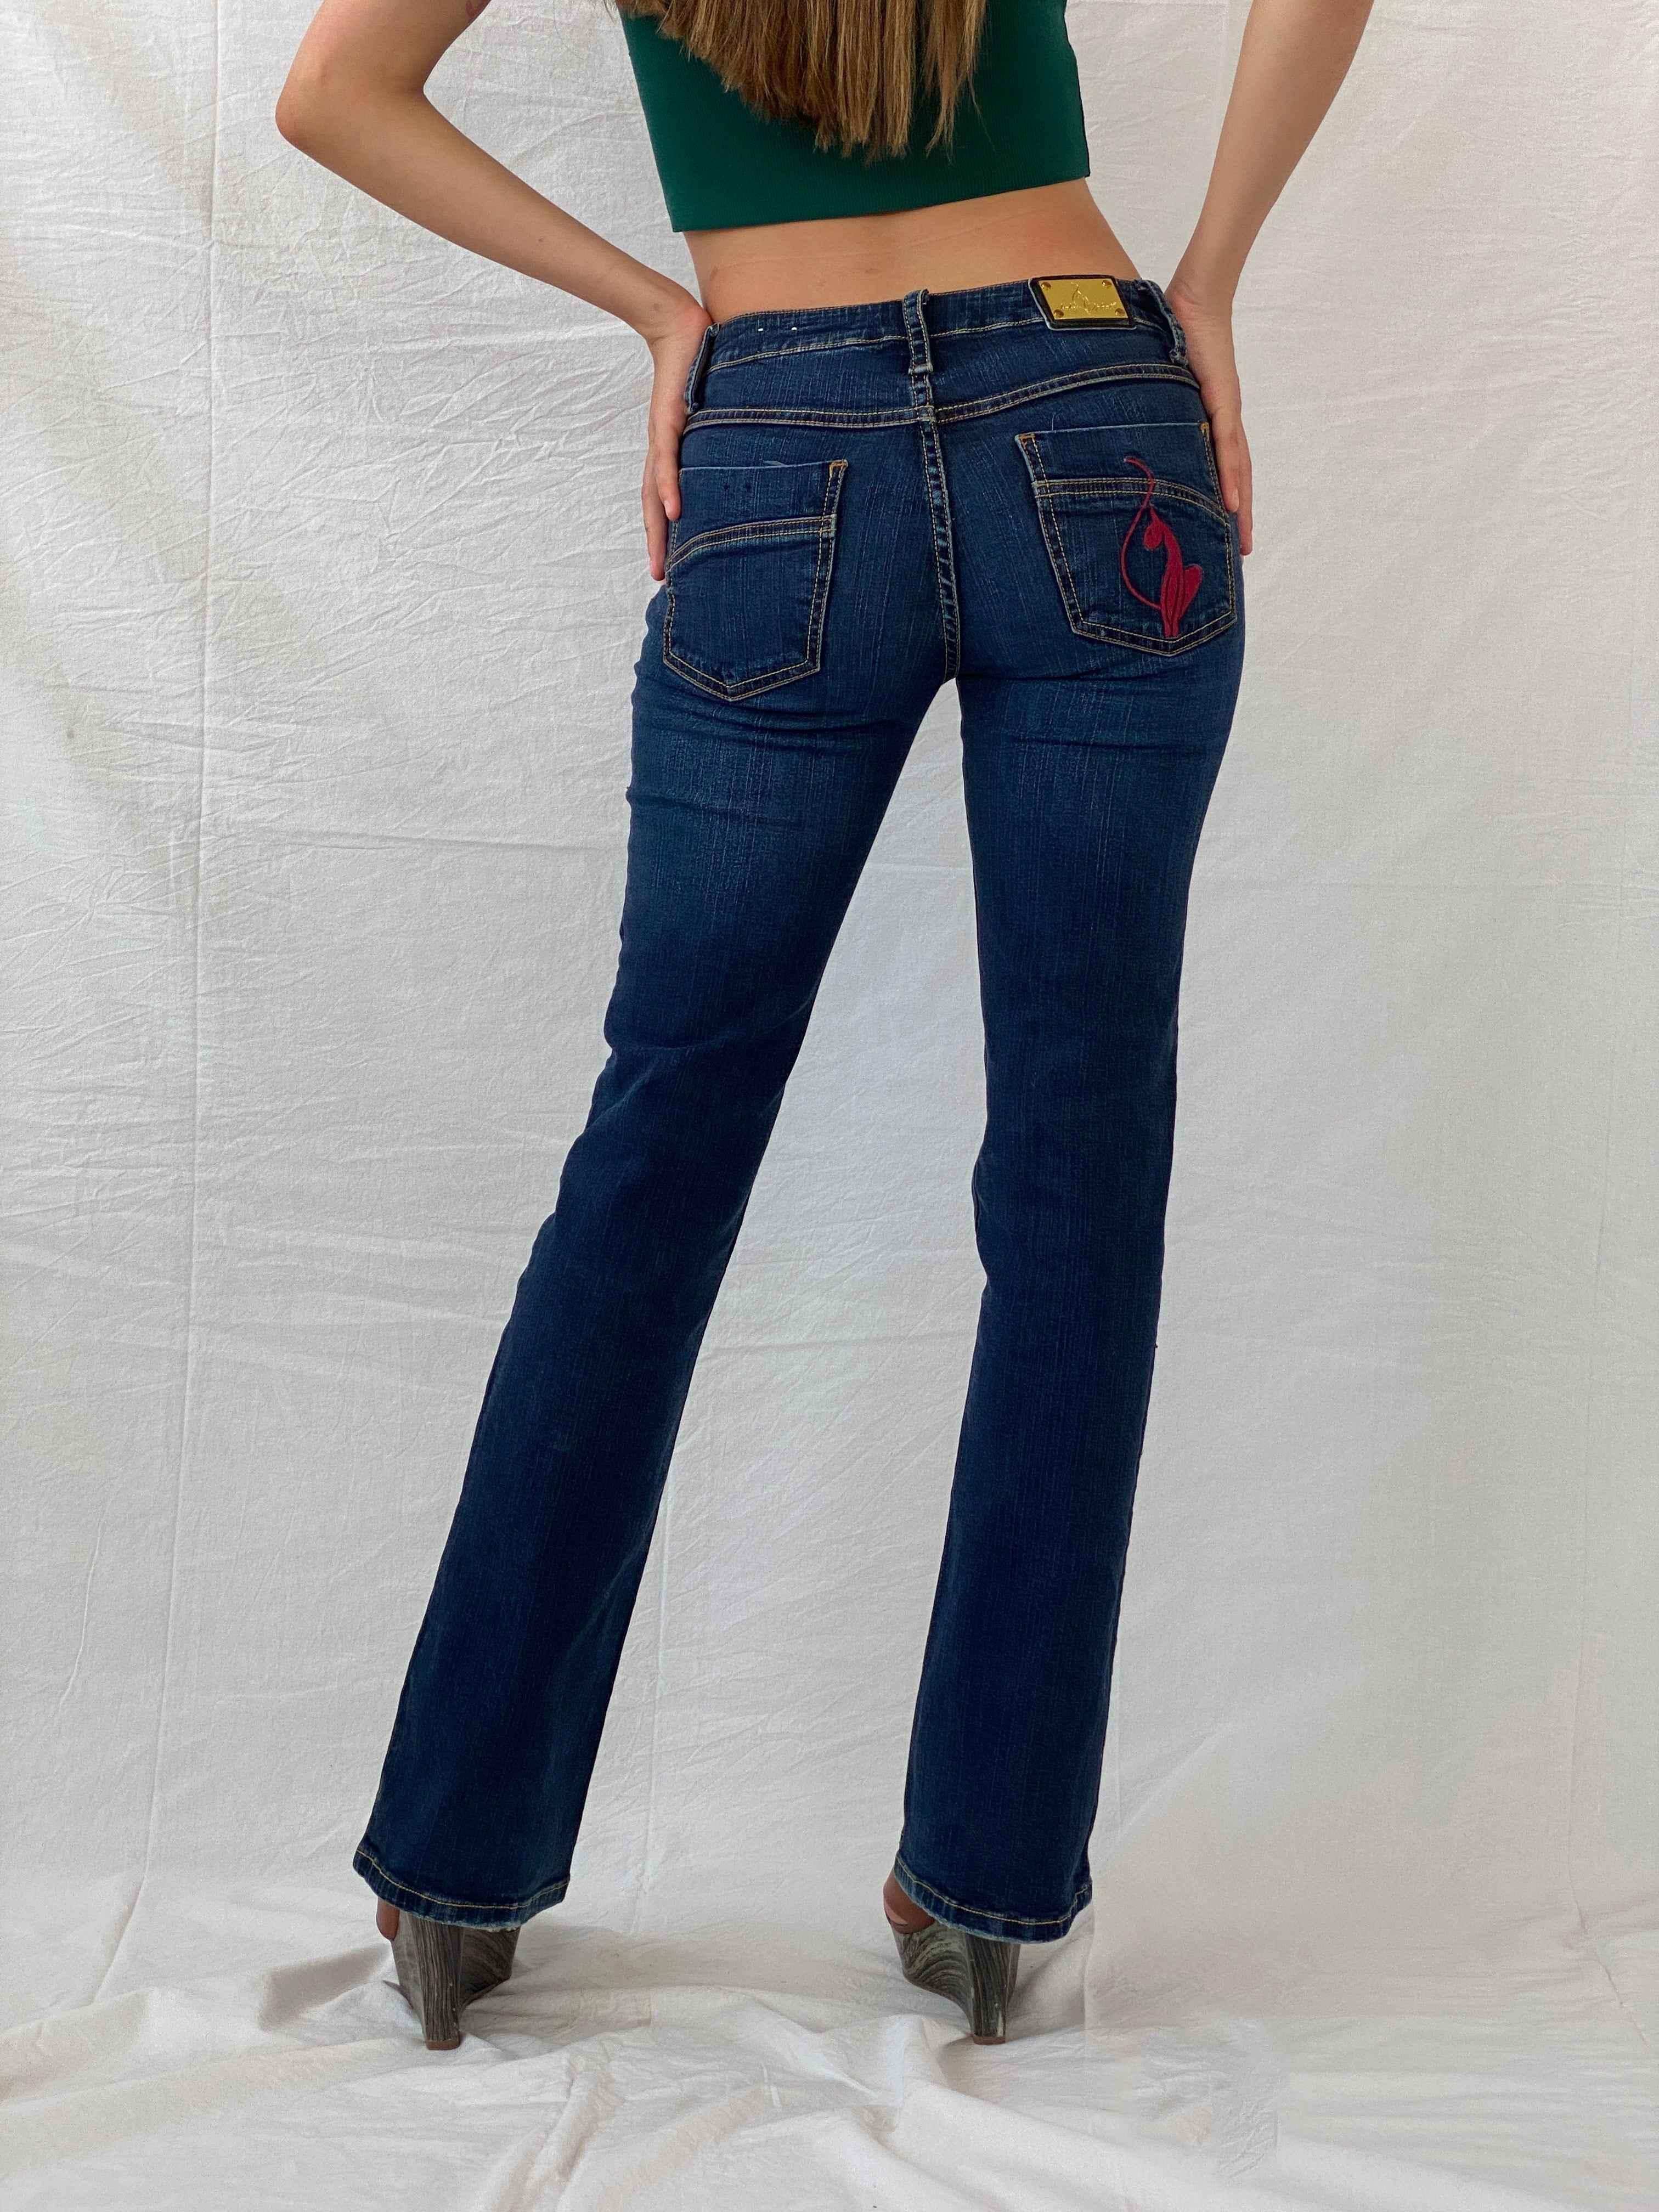 Y2K Baby Phat Low Rise Jeans - Balagan Vintage Jeans 00s, 90s, baby phat, jeans, low rise, low rise jeans, Mira